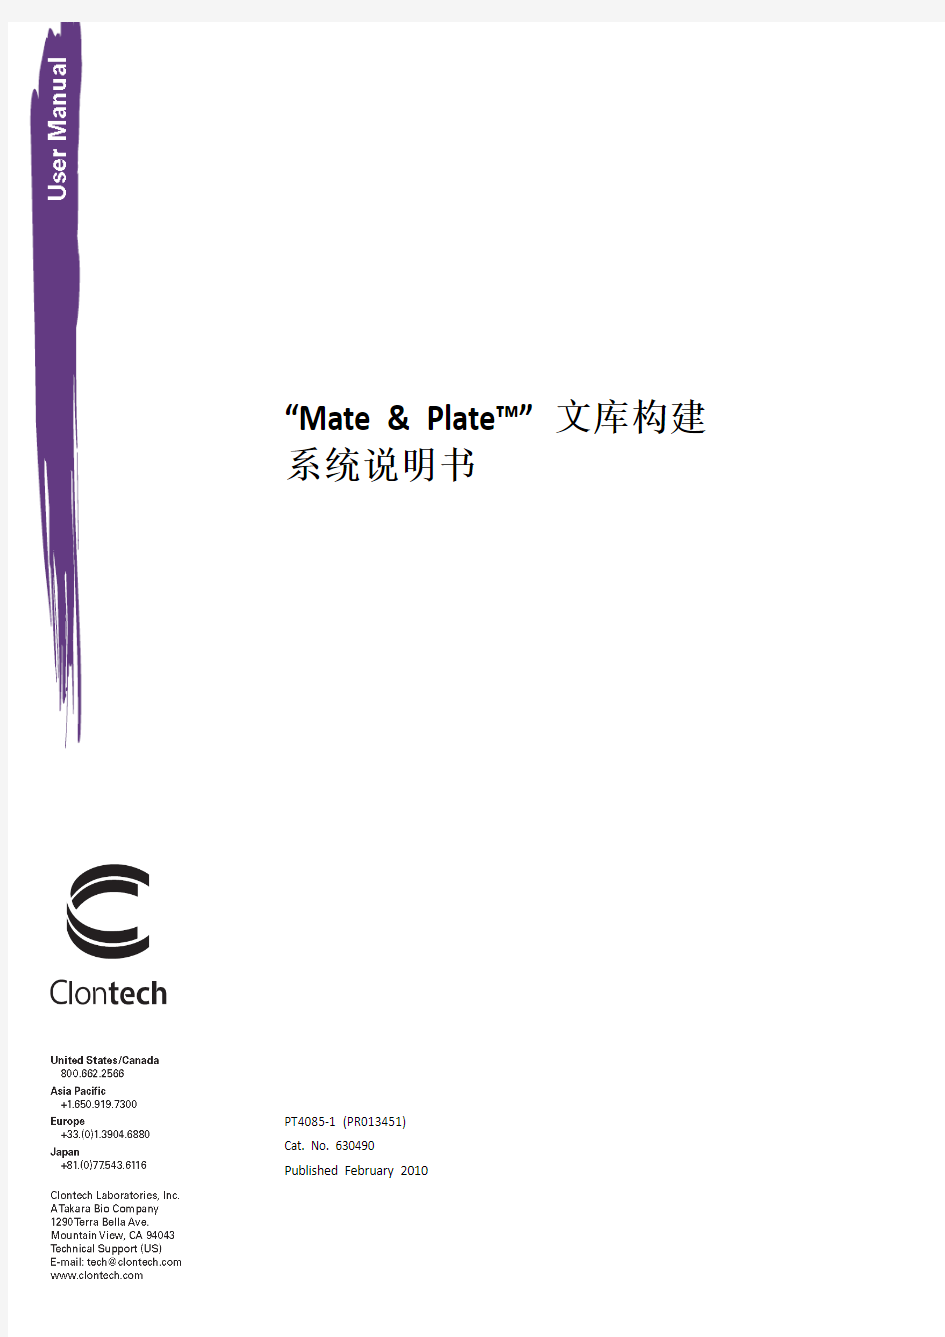 Mate_Plate酵母双杂交文库构建中文说明书(clontech)